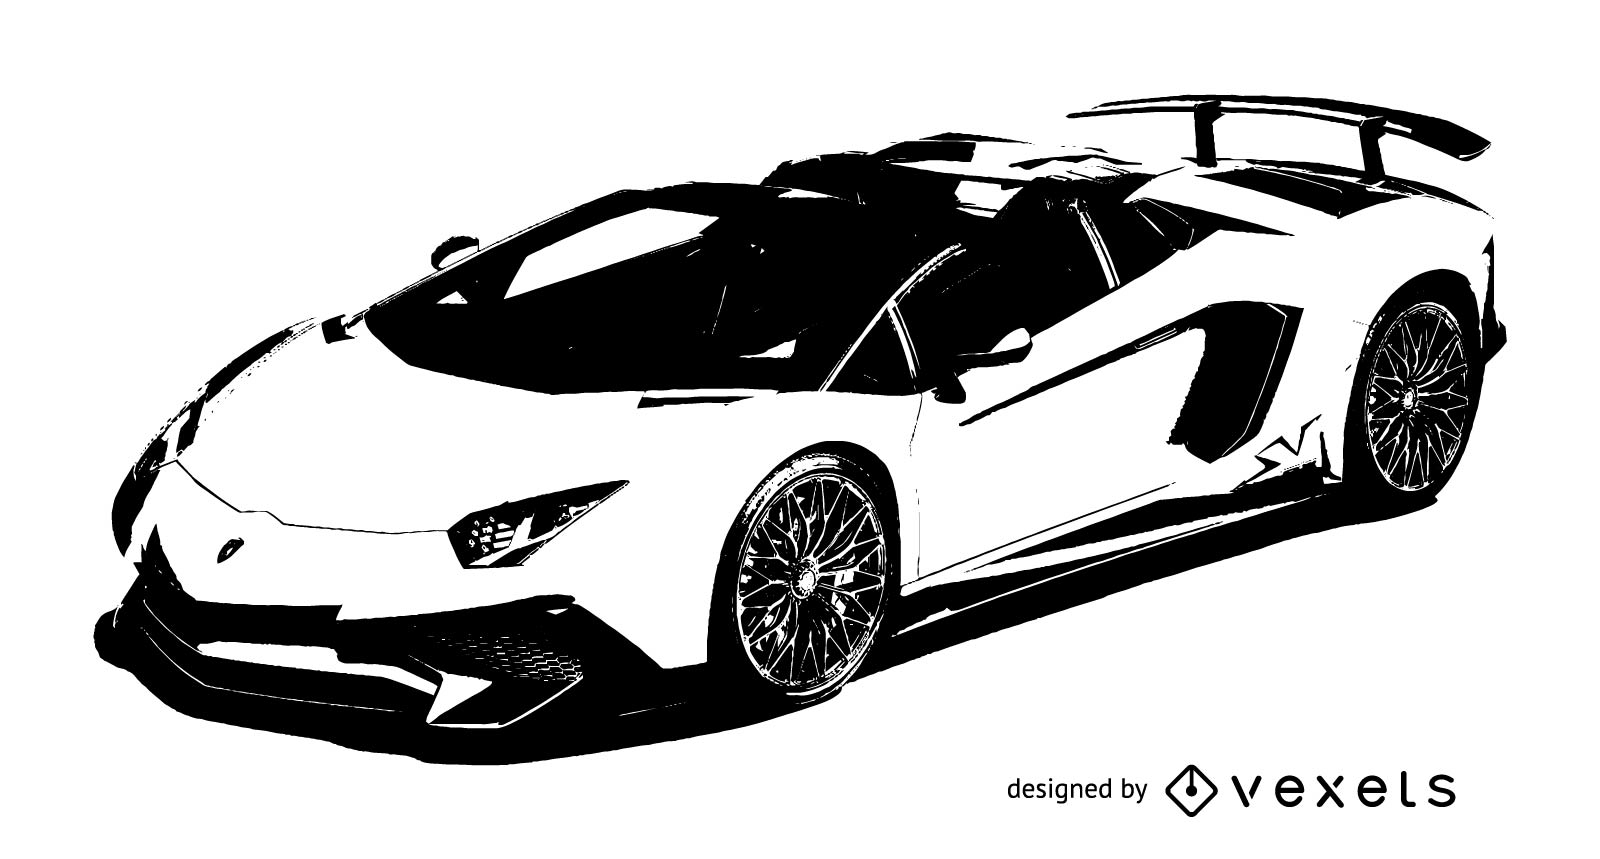 Luxus-Rennwagen Lamborghini